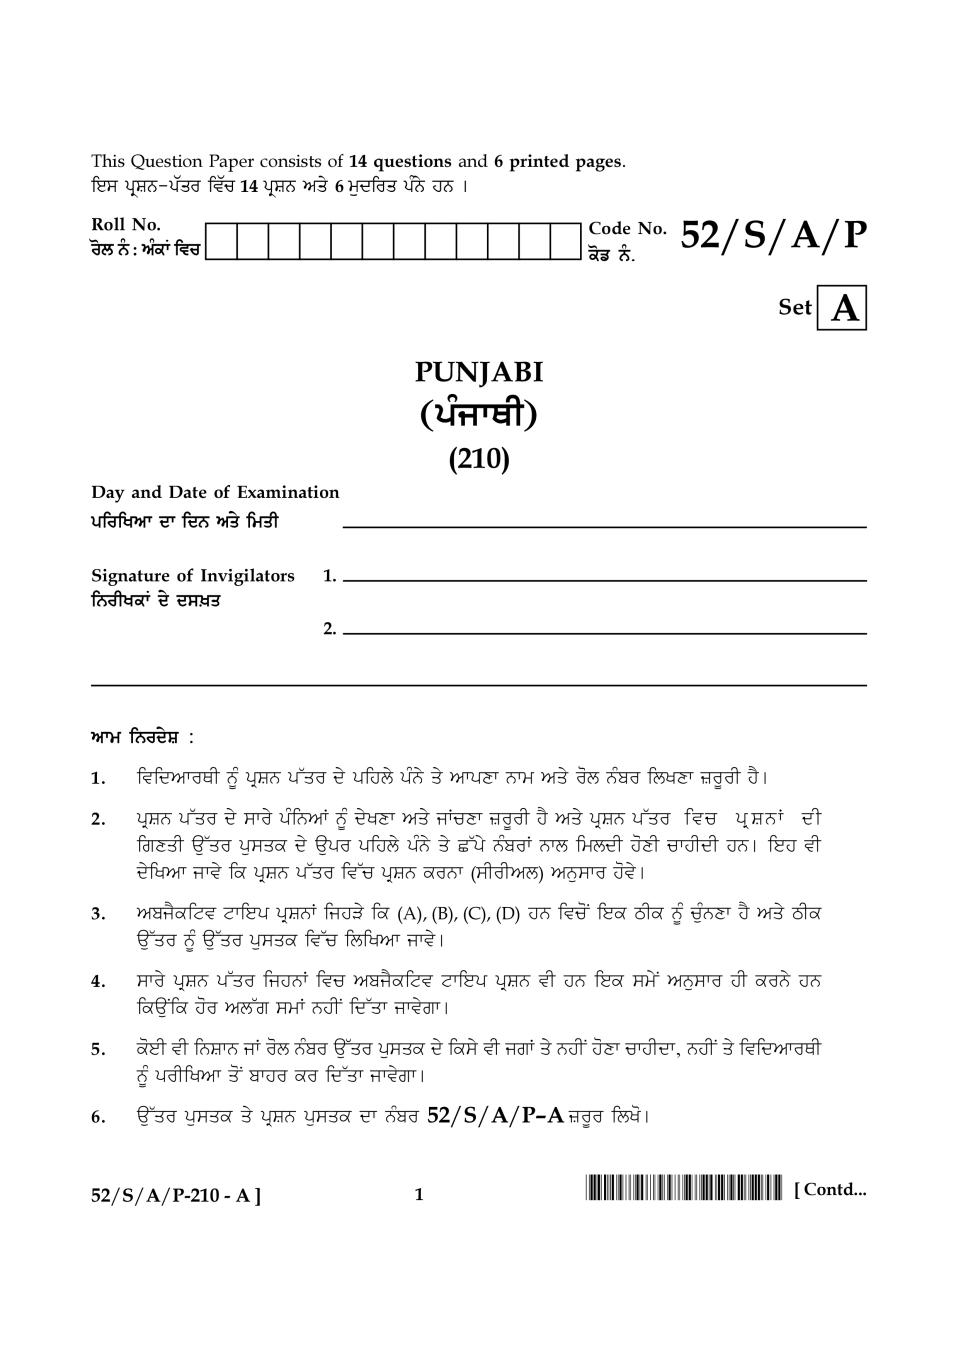 NIOS Class 10 Question Paper Apr 2016 - Punjabi - Page 1